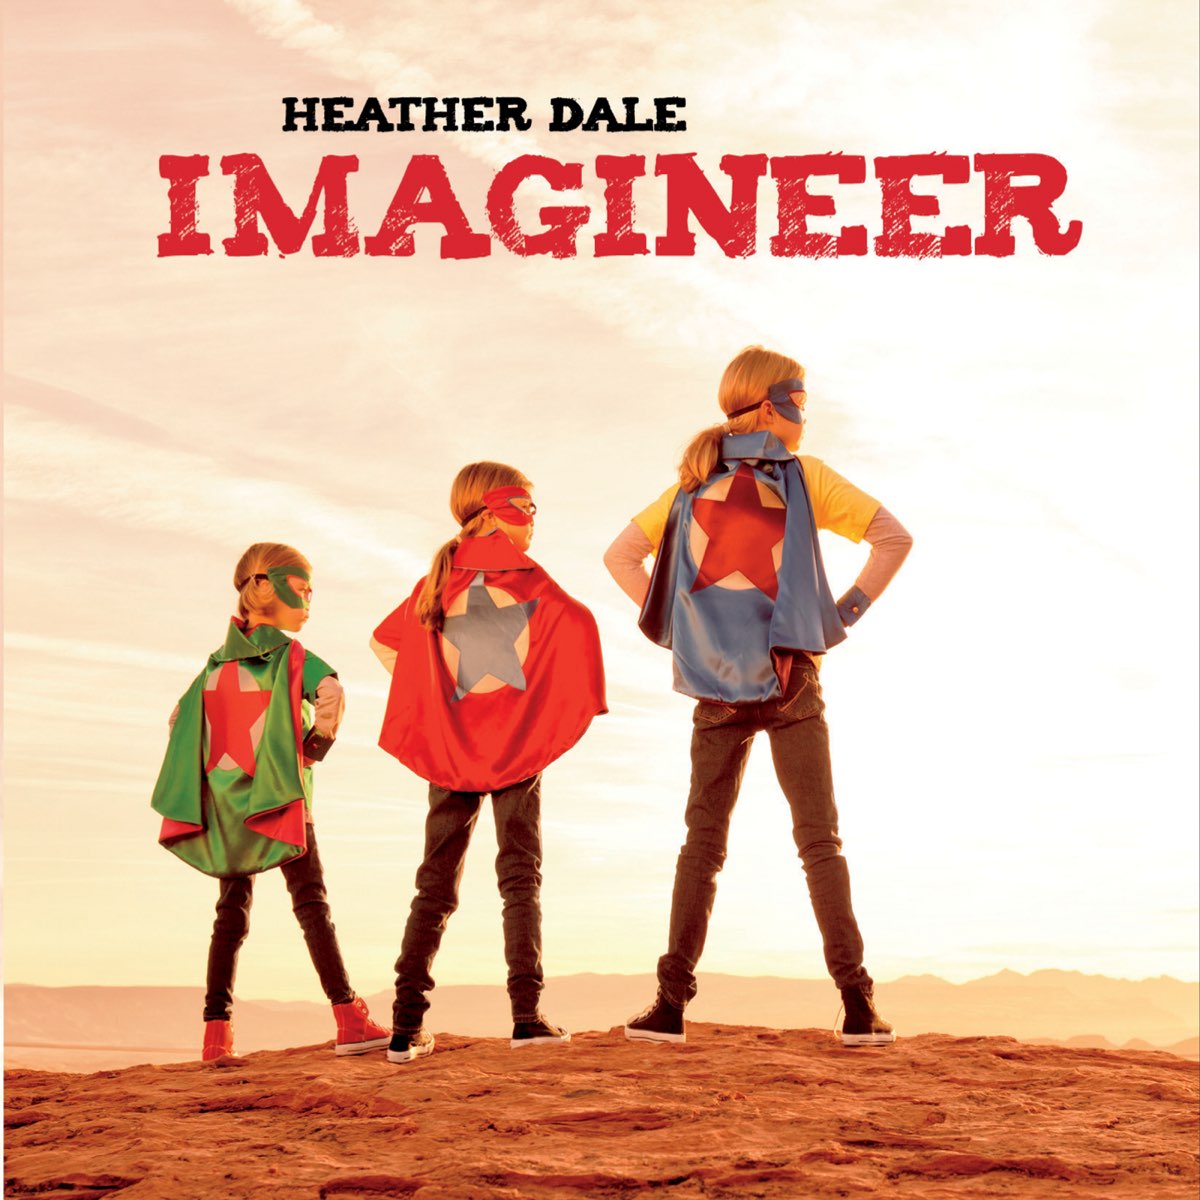 ‎Imagineer - Album by Heather Dale - Apple Music